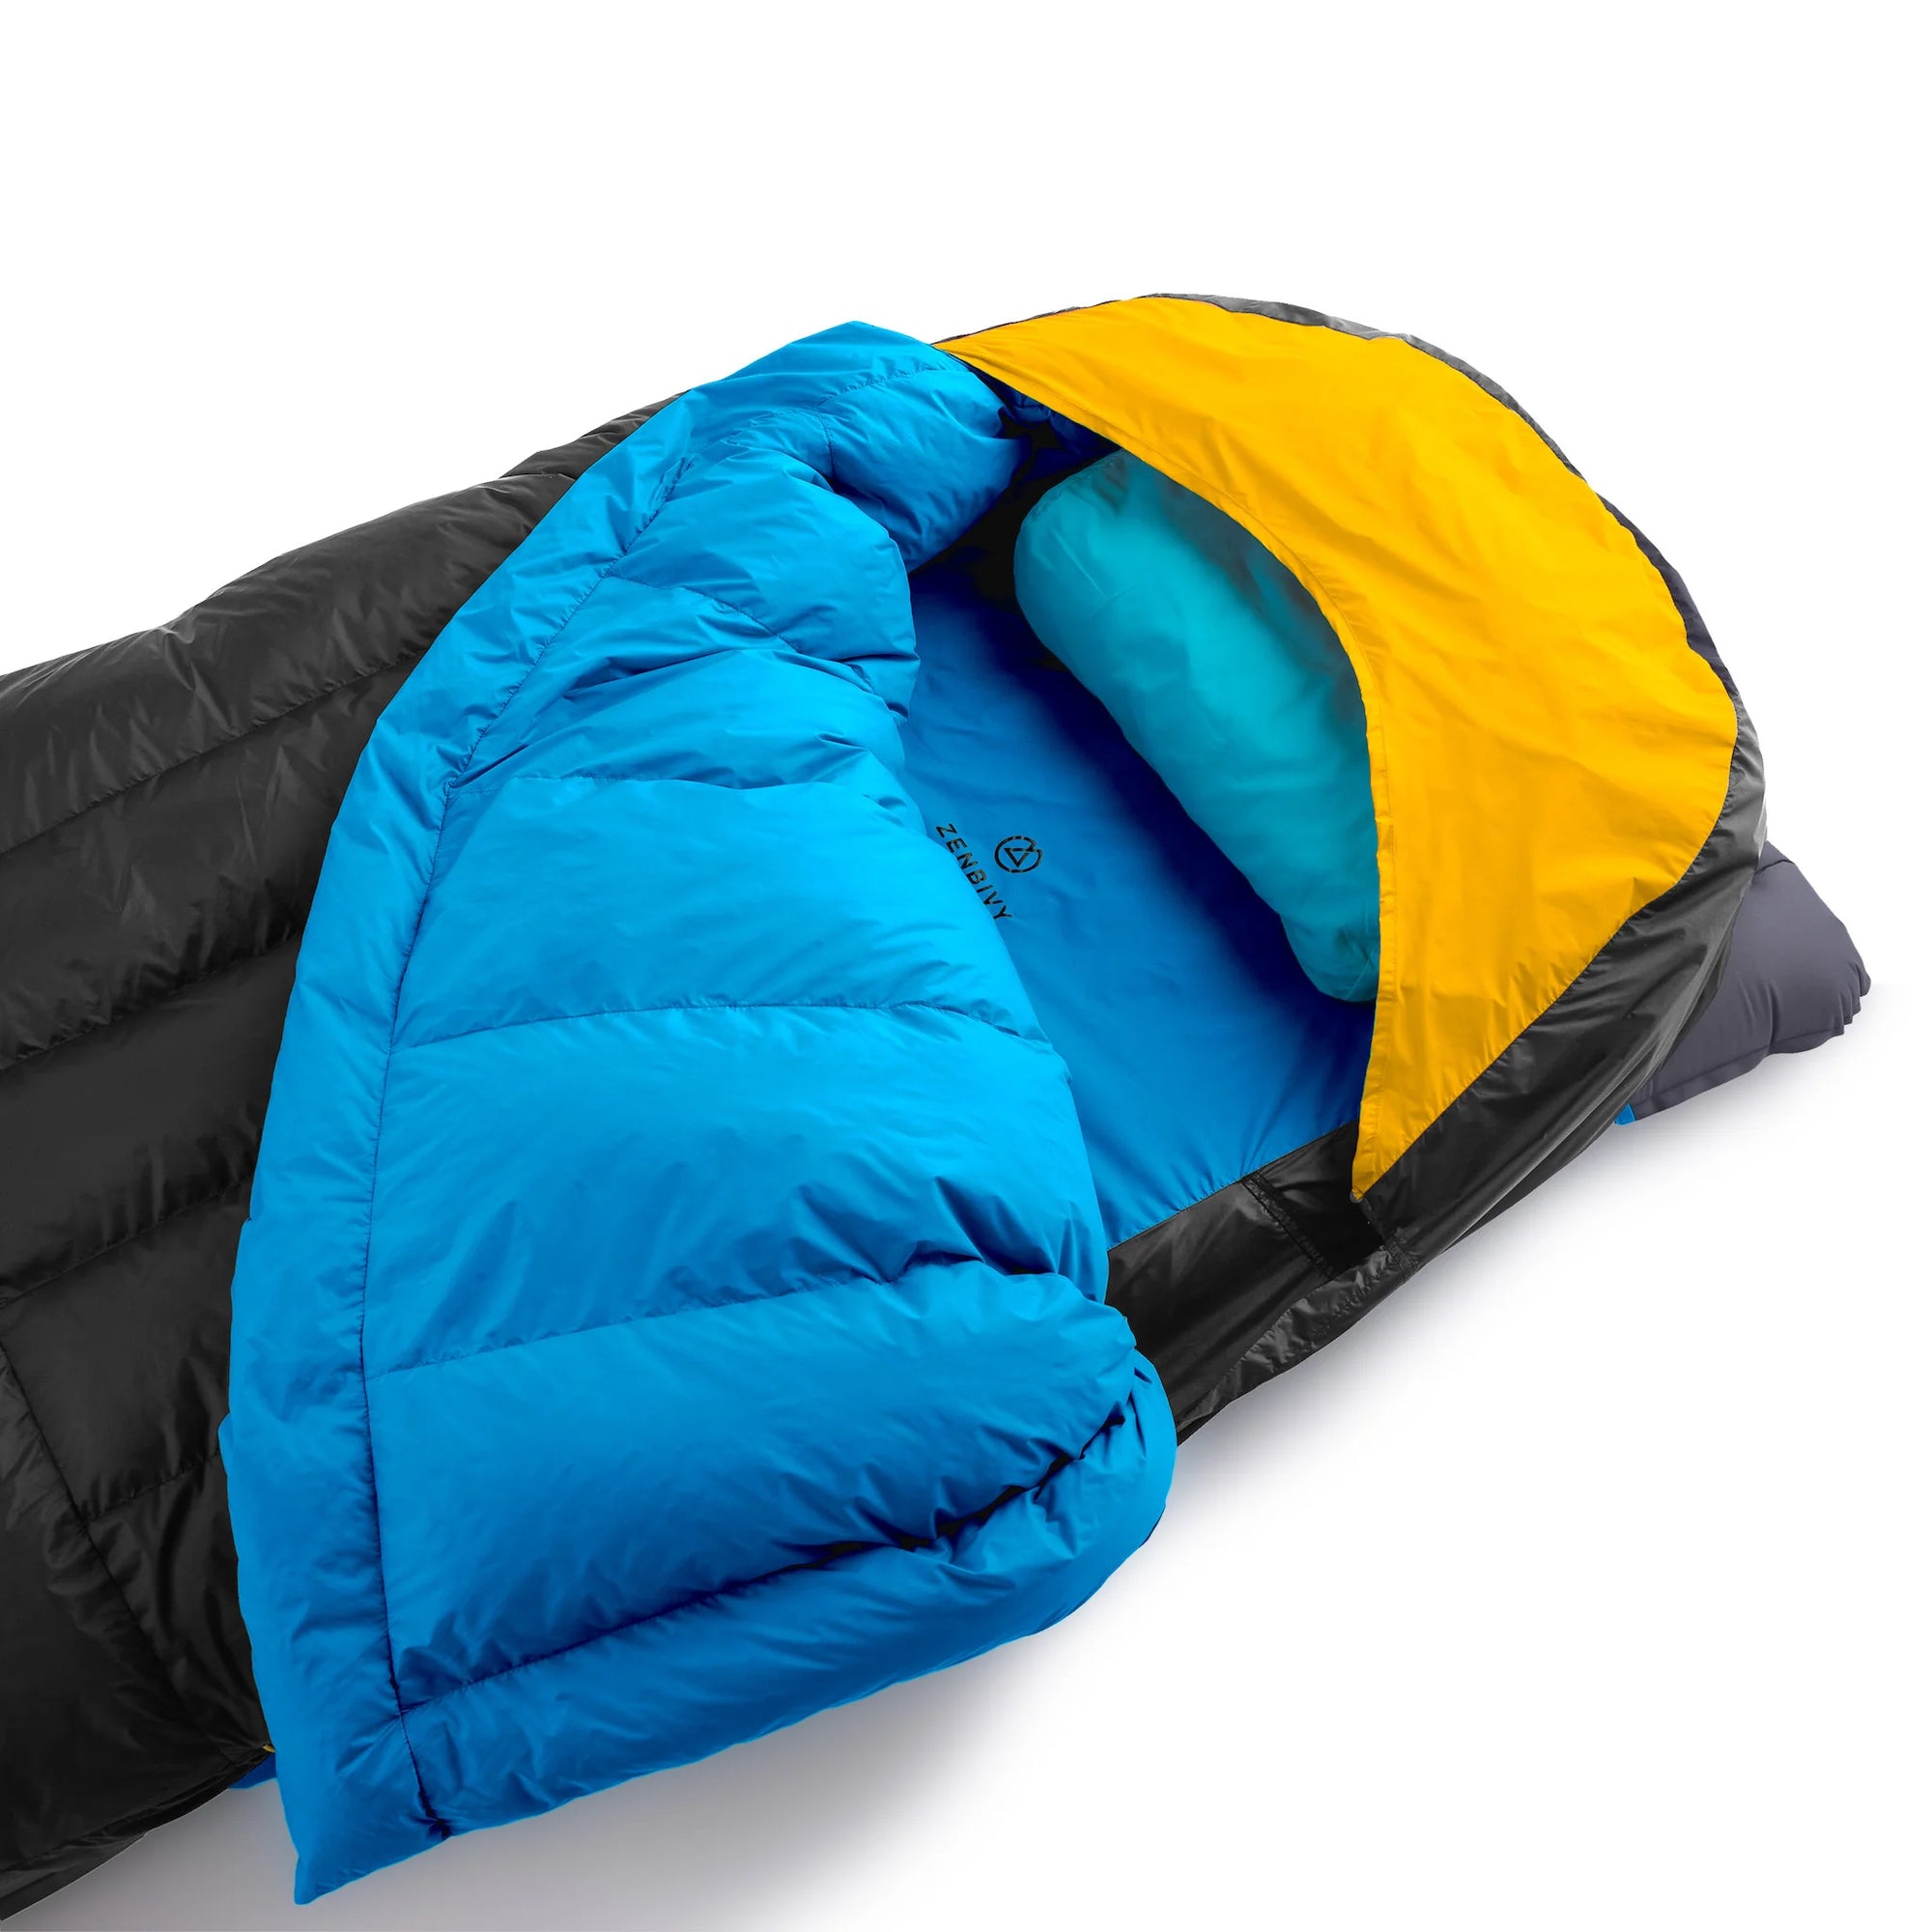 Fast & Light Bed -12°C: Outdoor Sleeping Bag System I Zenbivy